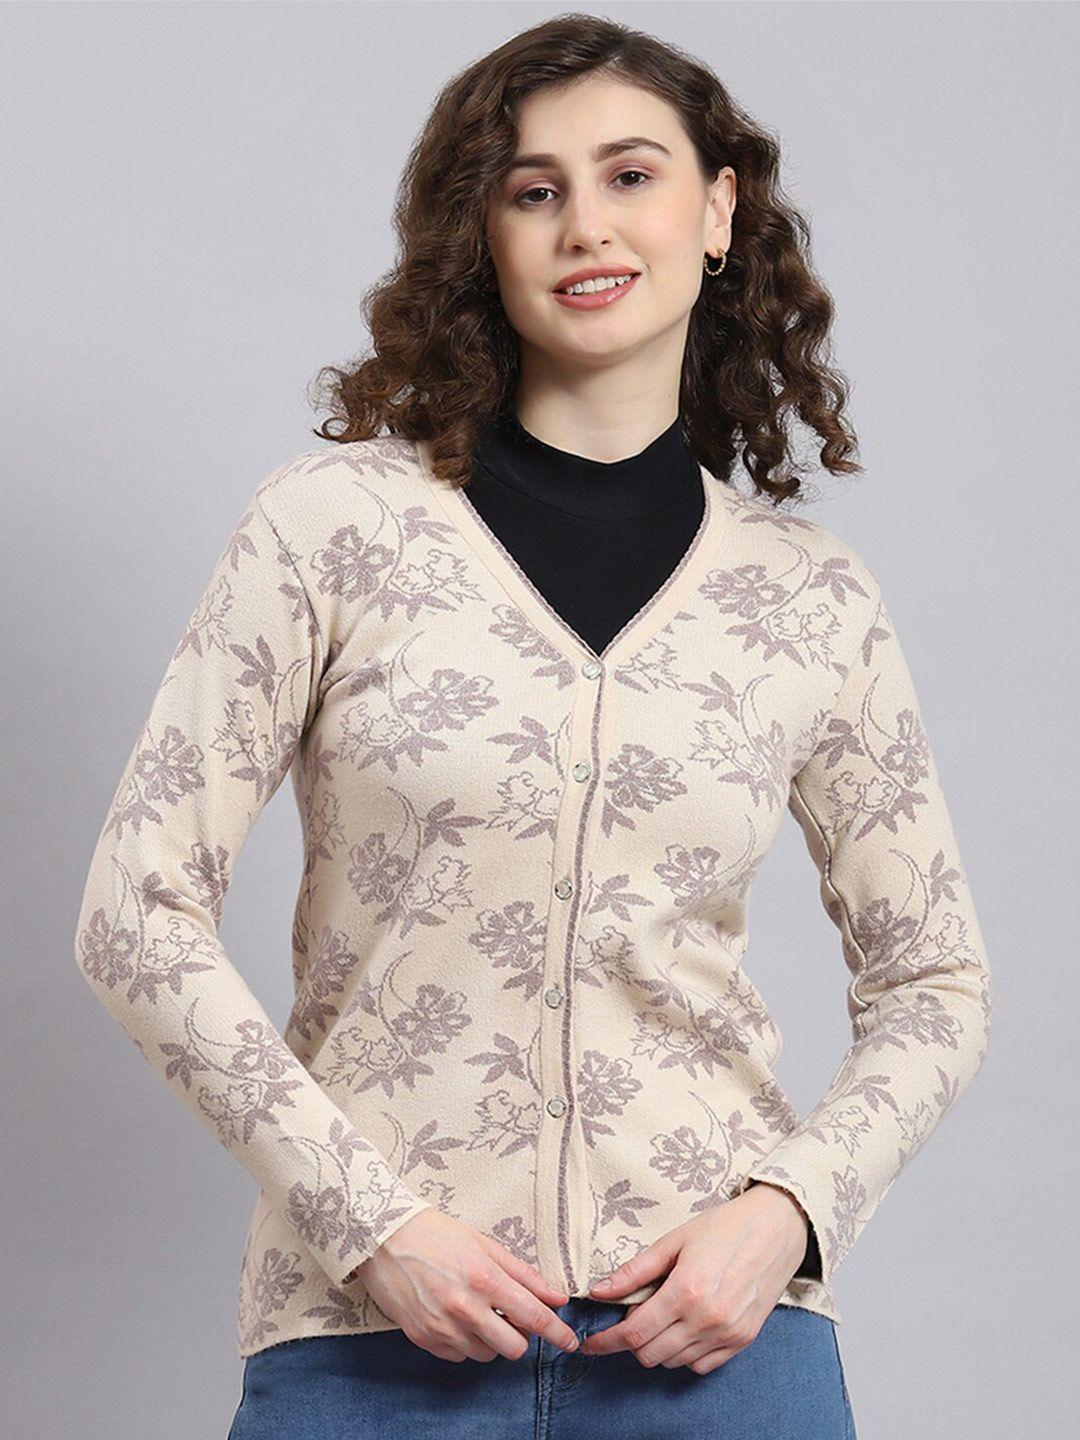 monte carlo floral printed woollen cardigan sweater